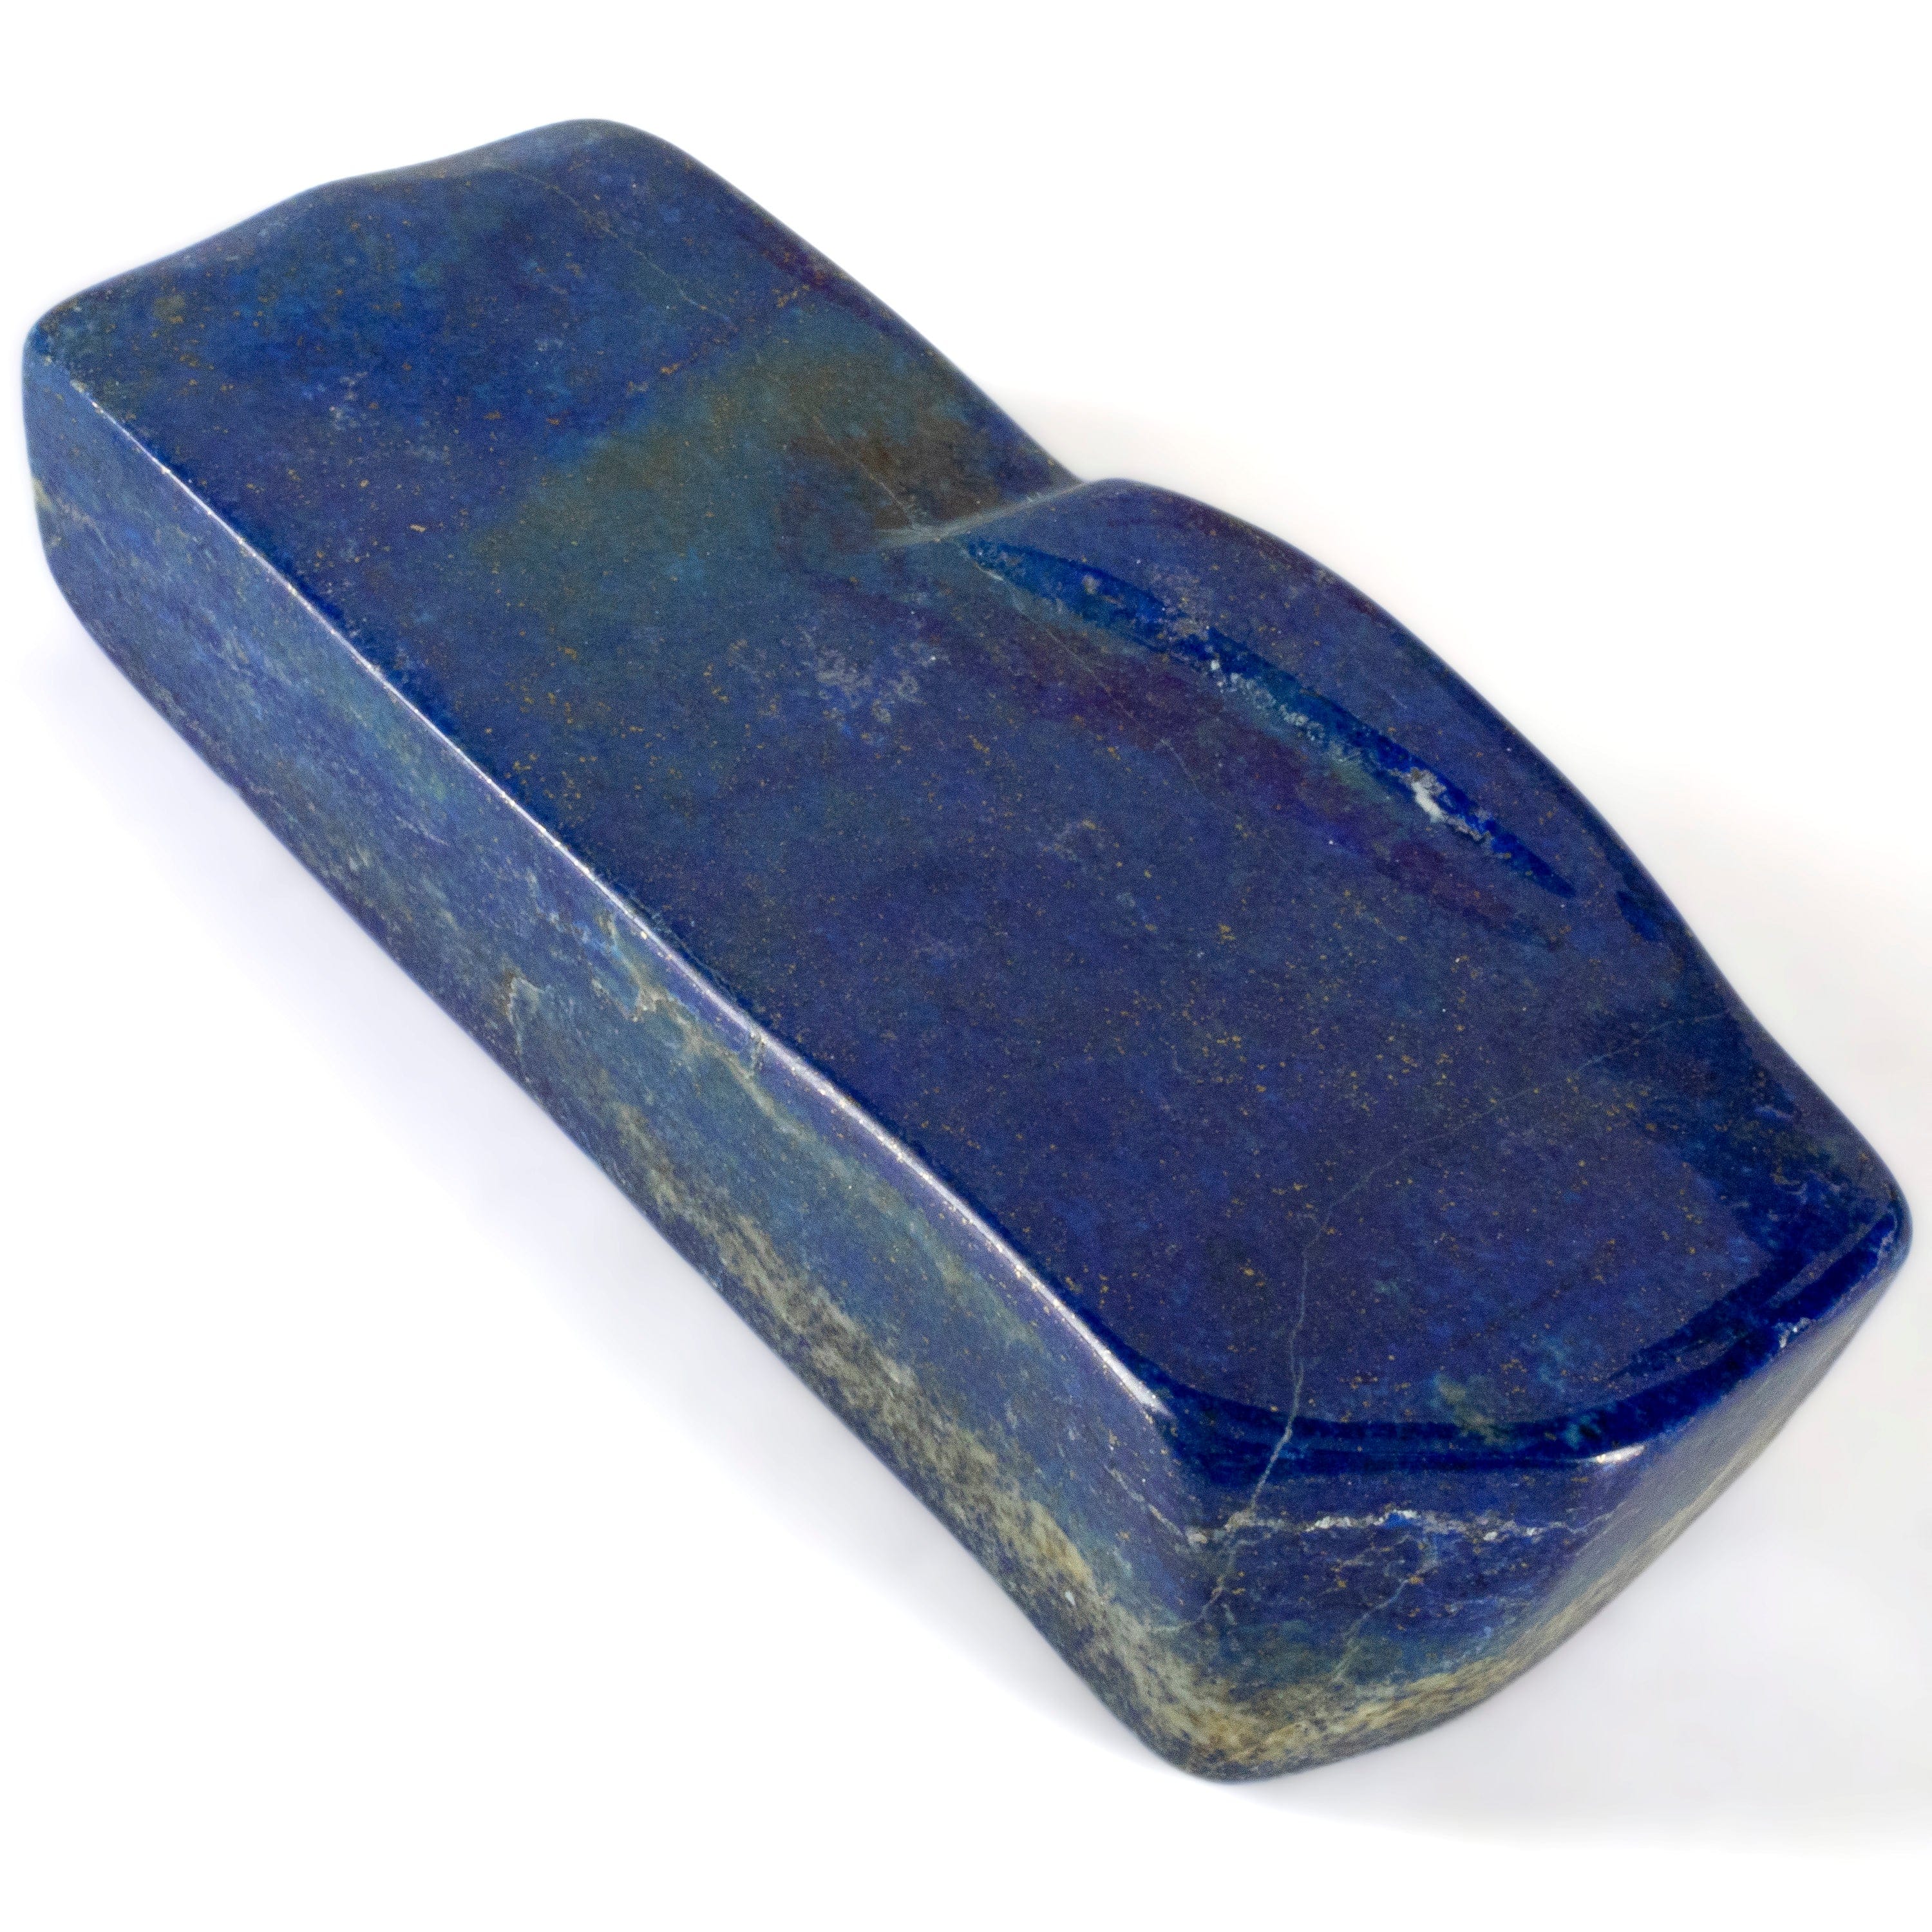 Kalifano Lapis Lapis Lazuli Freeform from Afghanistan - 8" / 1,390 grams LP1400.006